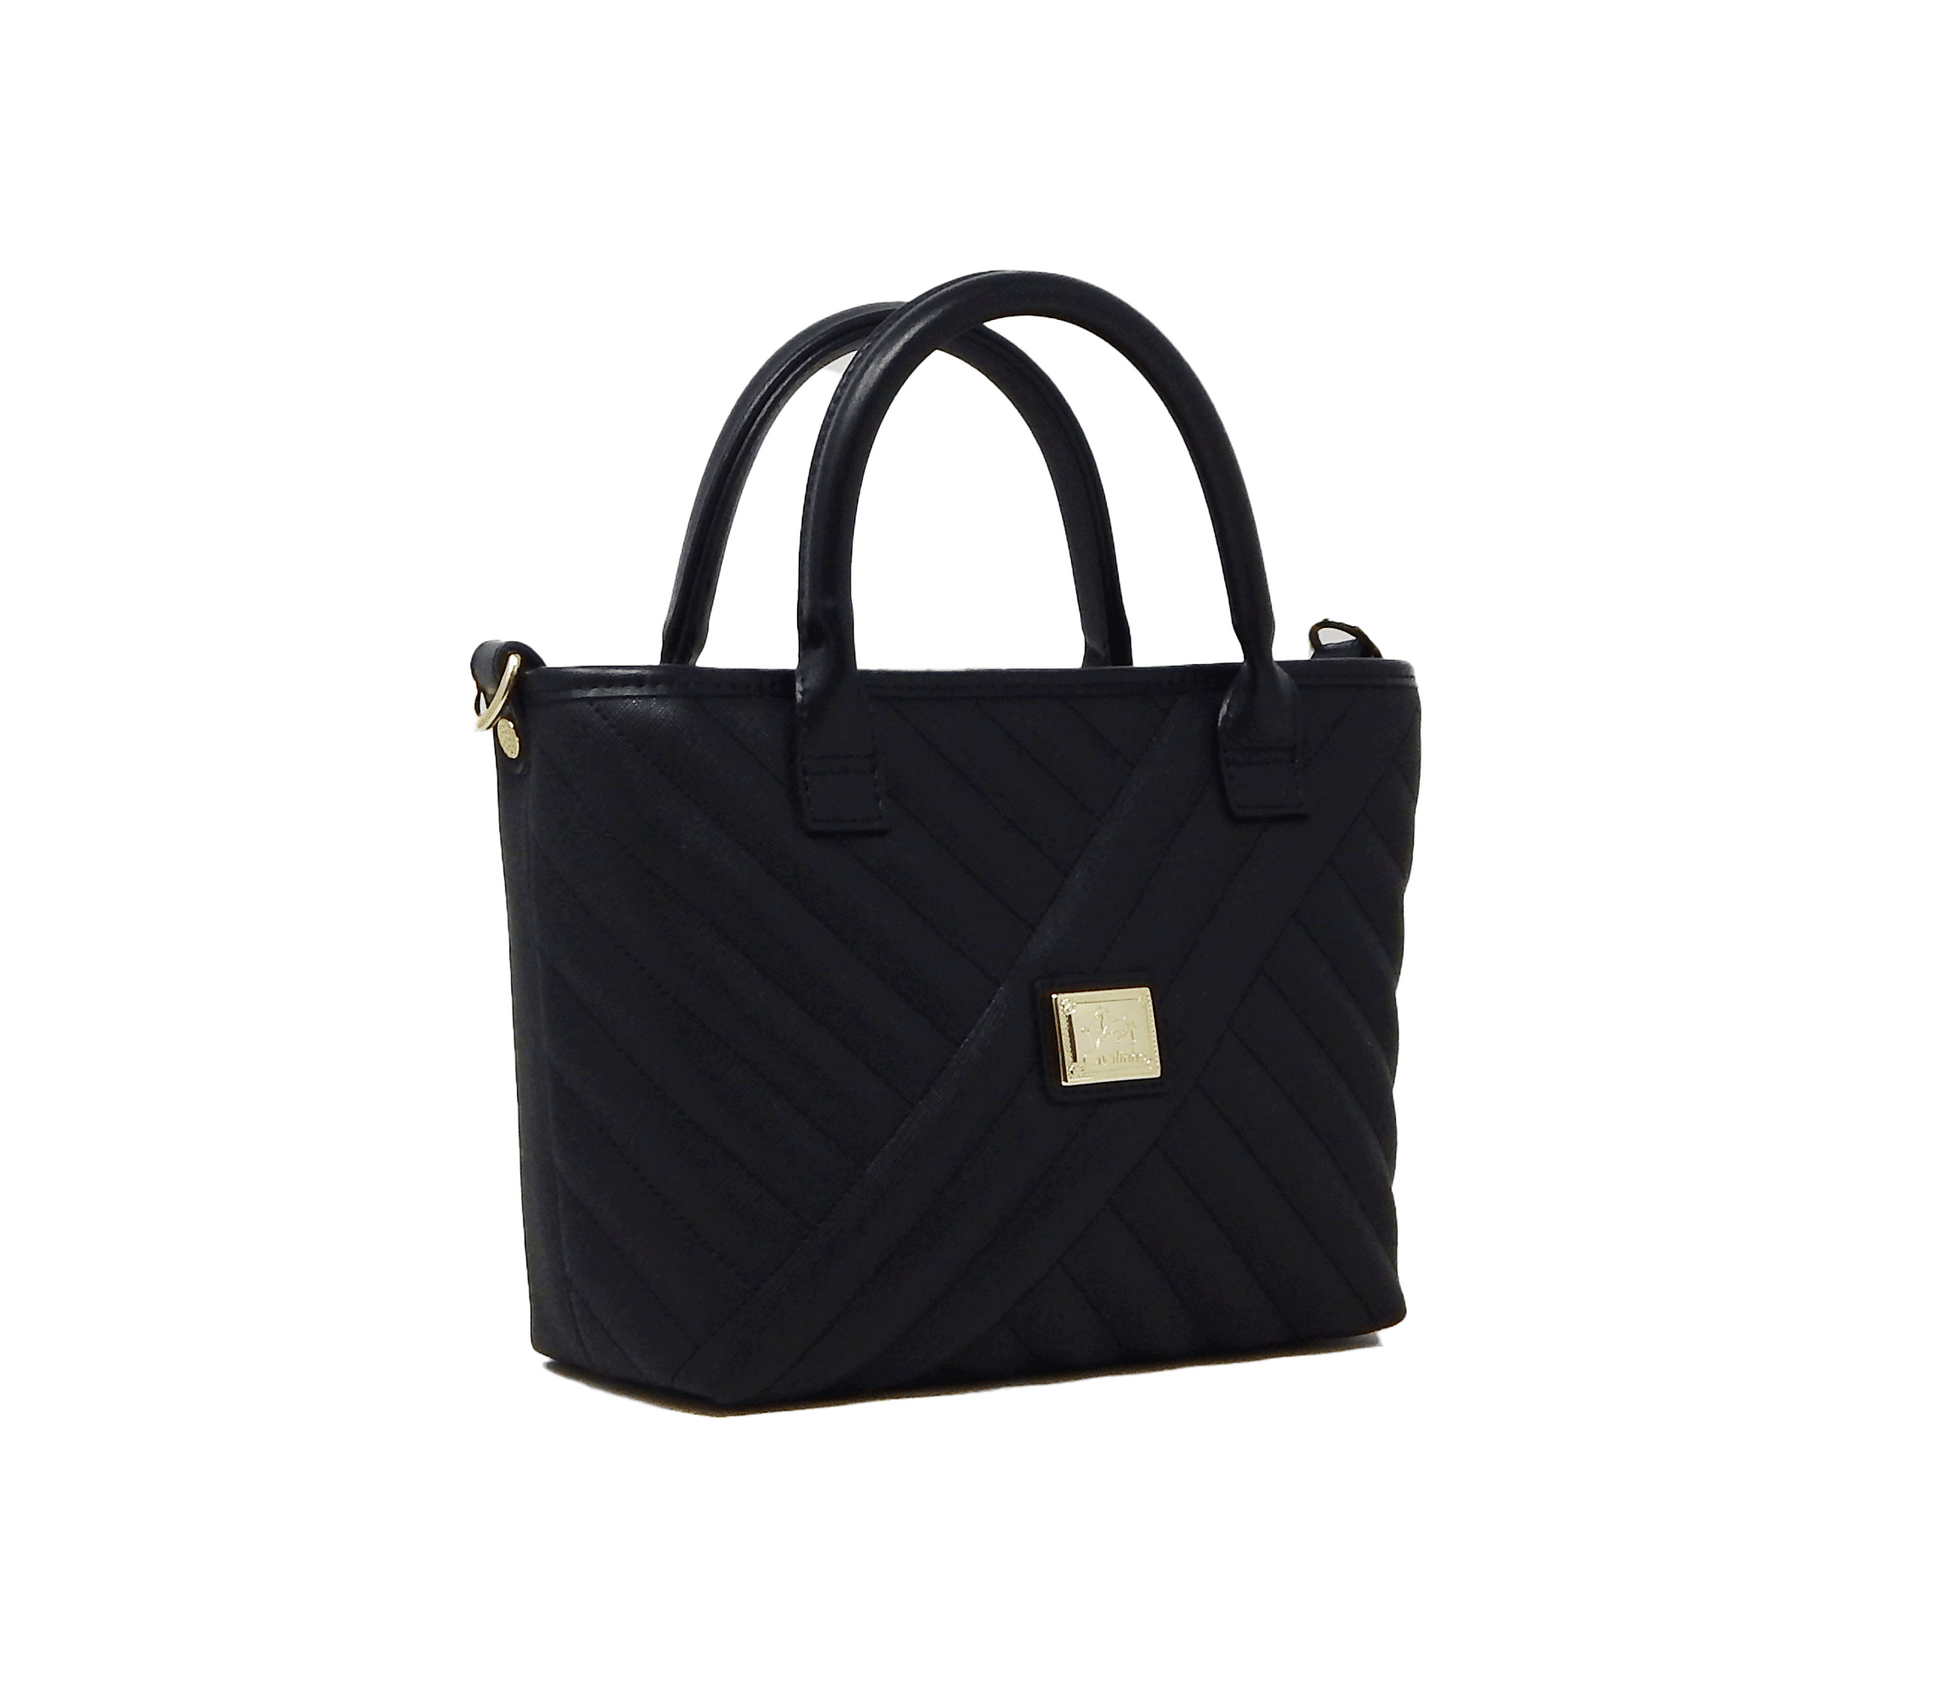 Cavalinho Charming Mini Handbag - Black - 18470243.01_2